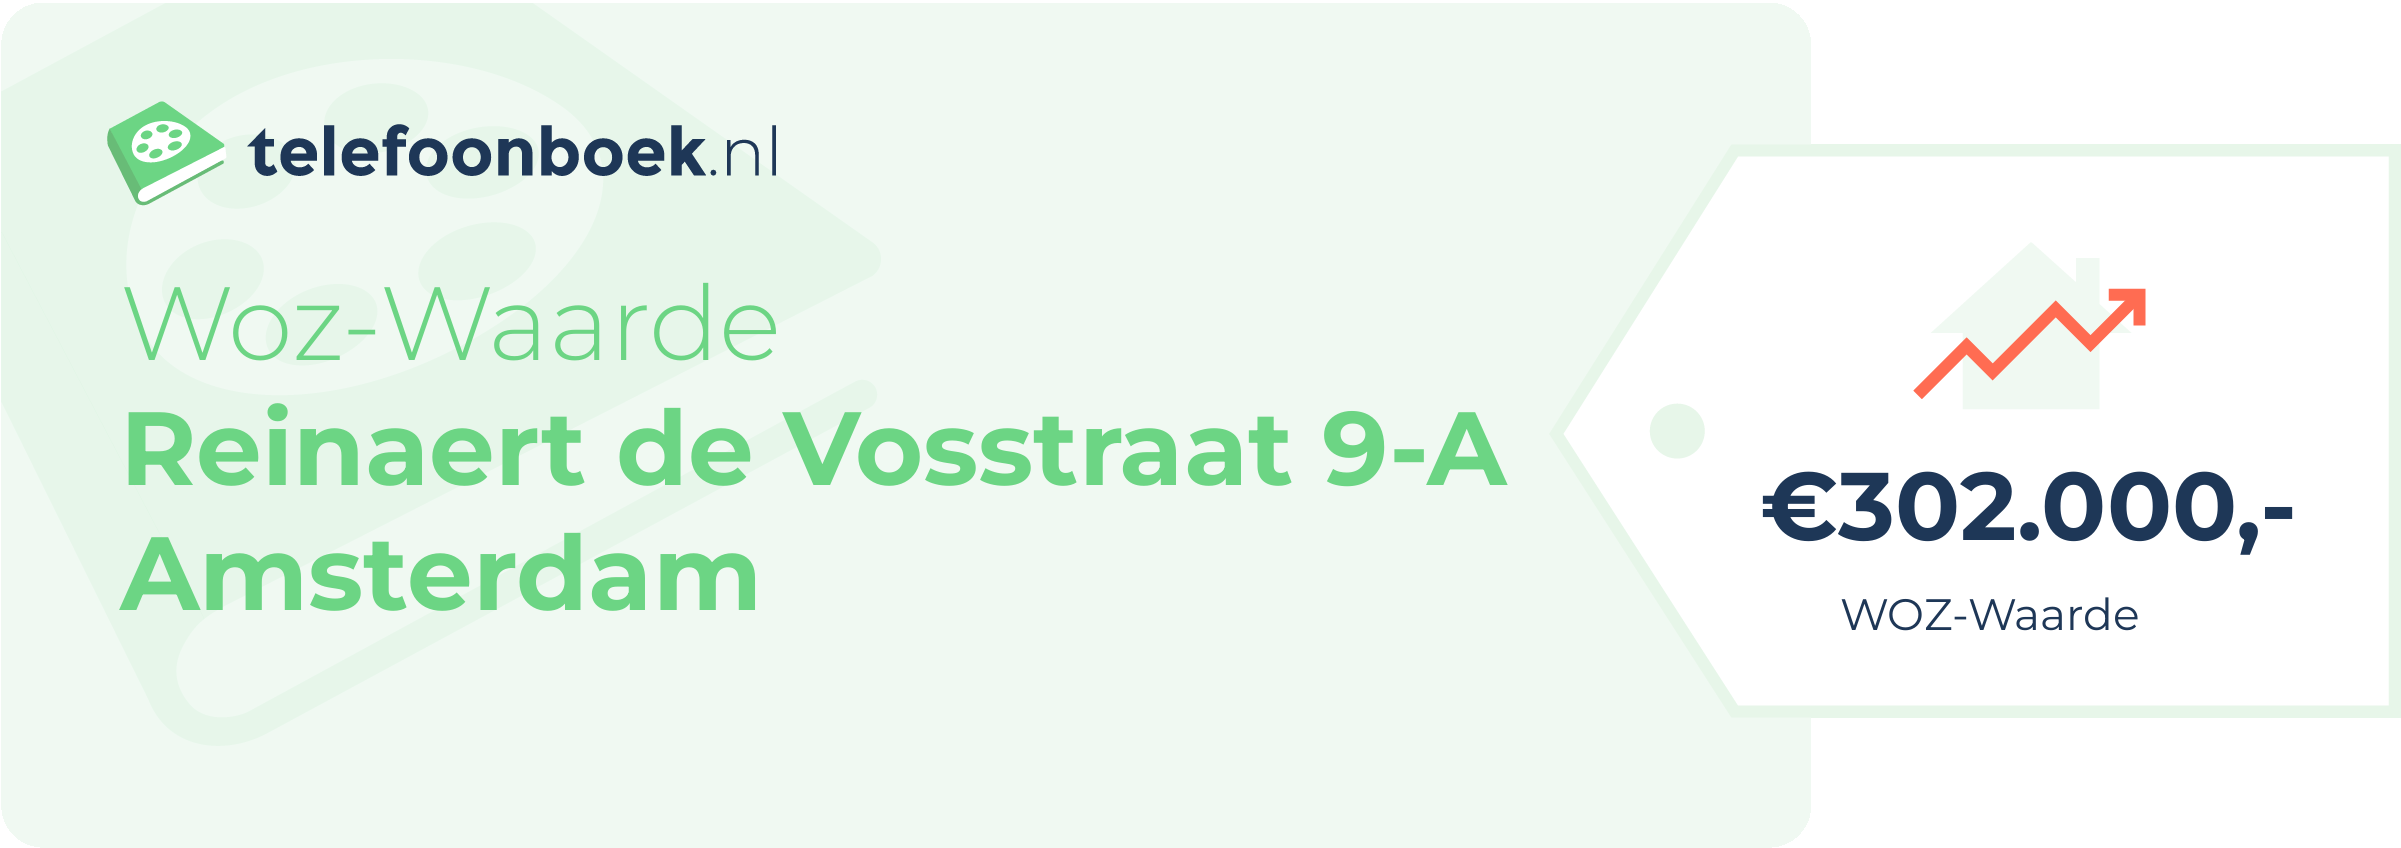 WOZ-waarde Reinaert De Vosstraat 9-A Amsterdam